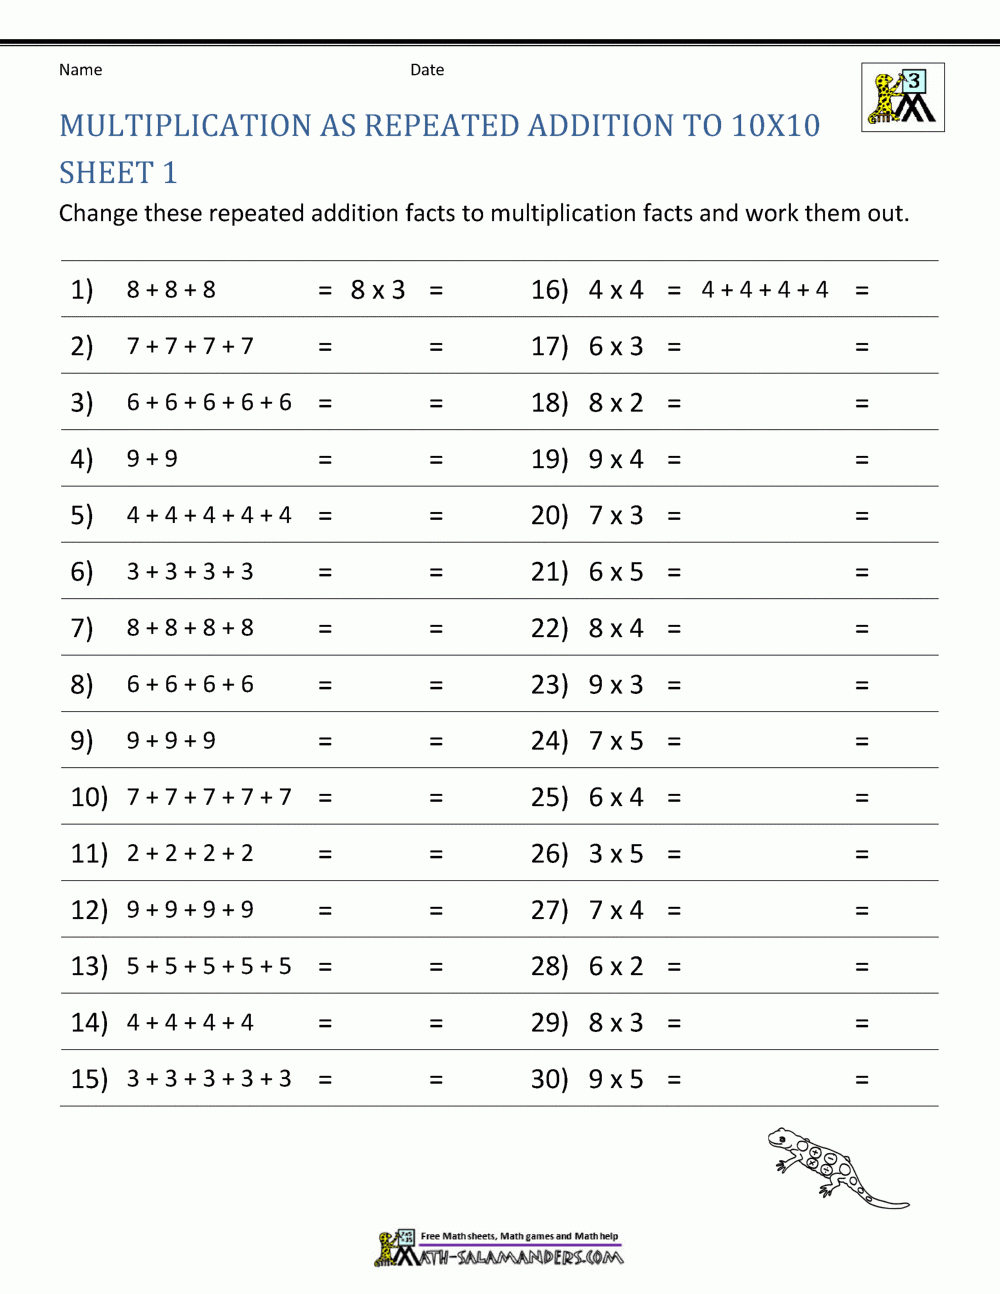 Multiplication Facts Worksheets - Understanding intended for Printable Multiplication Fact Sheets